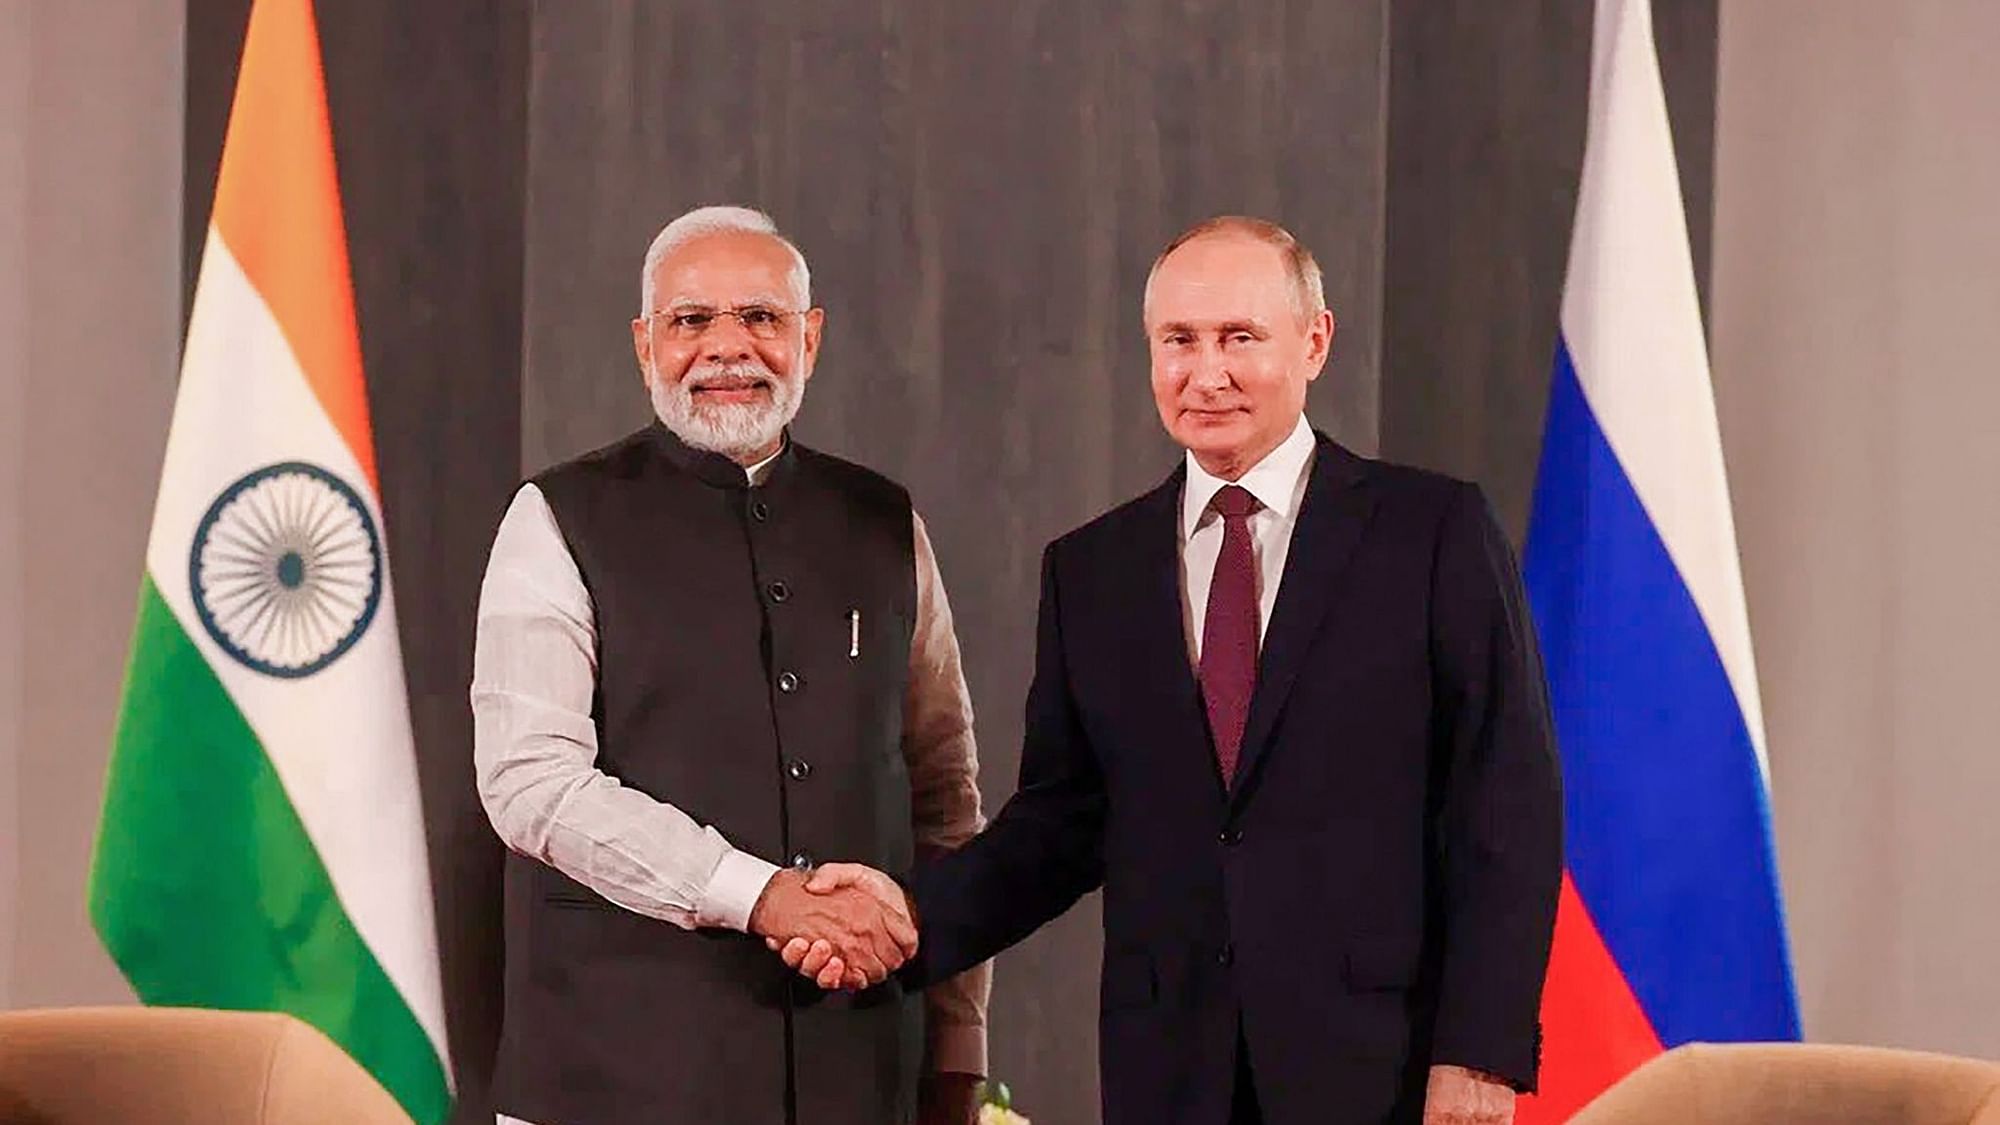 <div class="paragraphs"><p>Prime Minister Narendra Modi with President of Russia Vladimir Putin.</p></div>